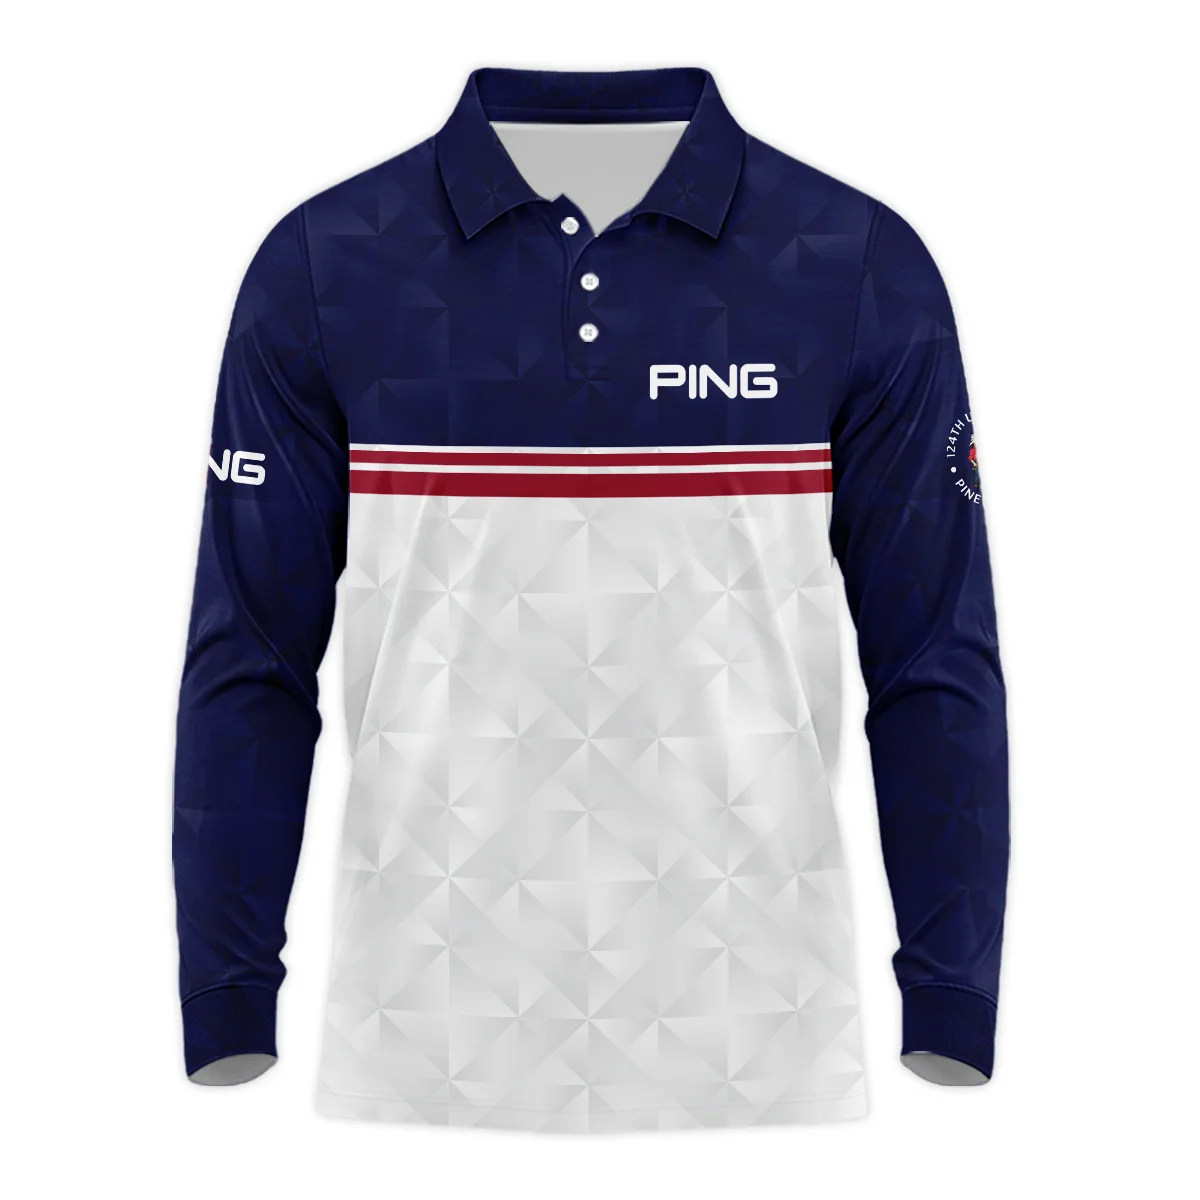 Golf Sport 124th U.S. Open Pinehurst Ping Bomber Jacket Dark Blue White Abstract Geometric Triangles All Over Print Bomber Jacket